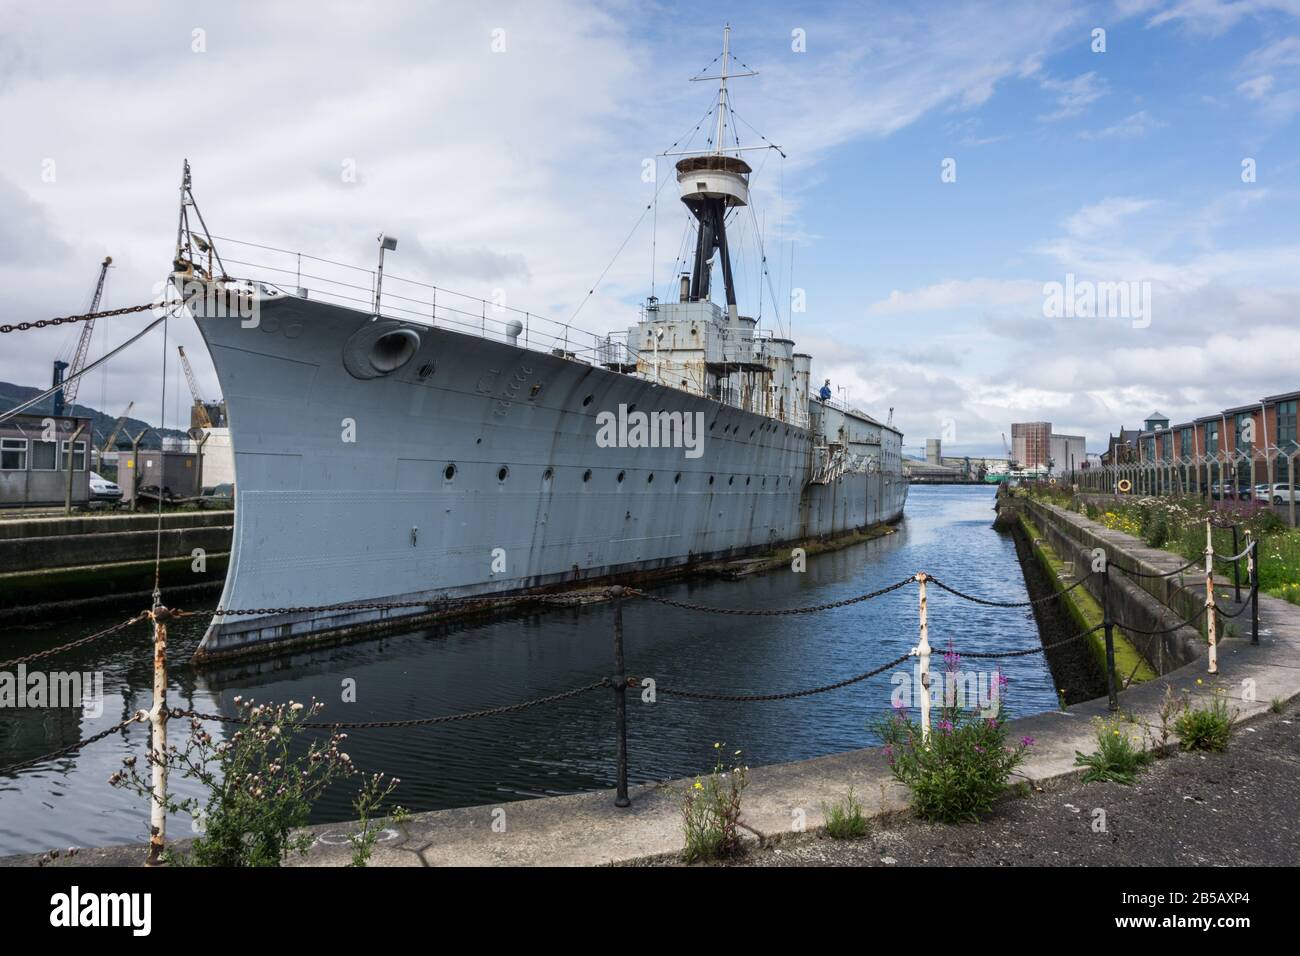 The Royal Navy light cruiser HMS Caroline prior to restoration at a dock in Belfast, Northern Ireland. Stock Photo